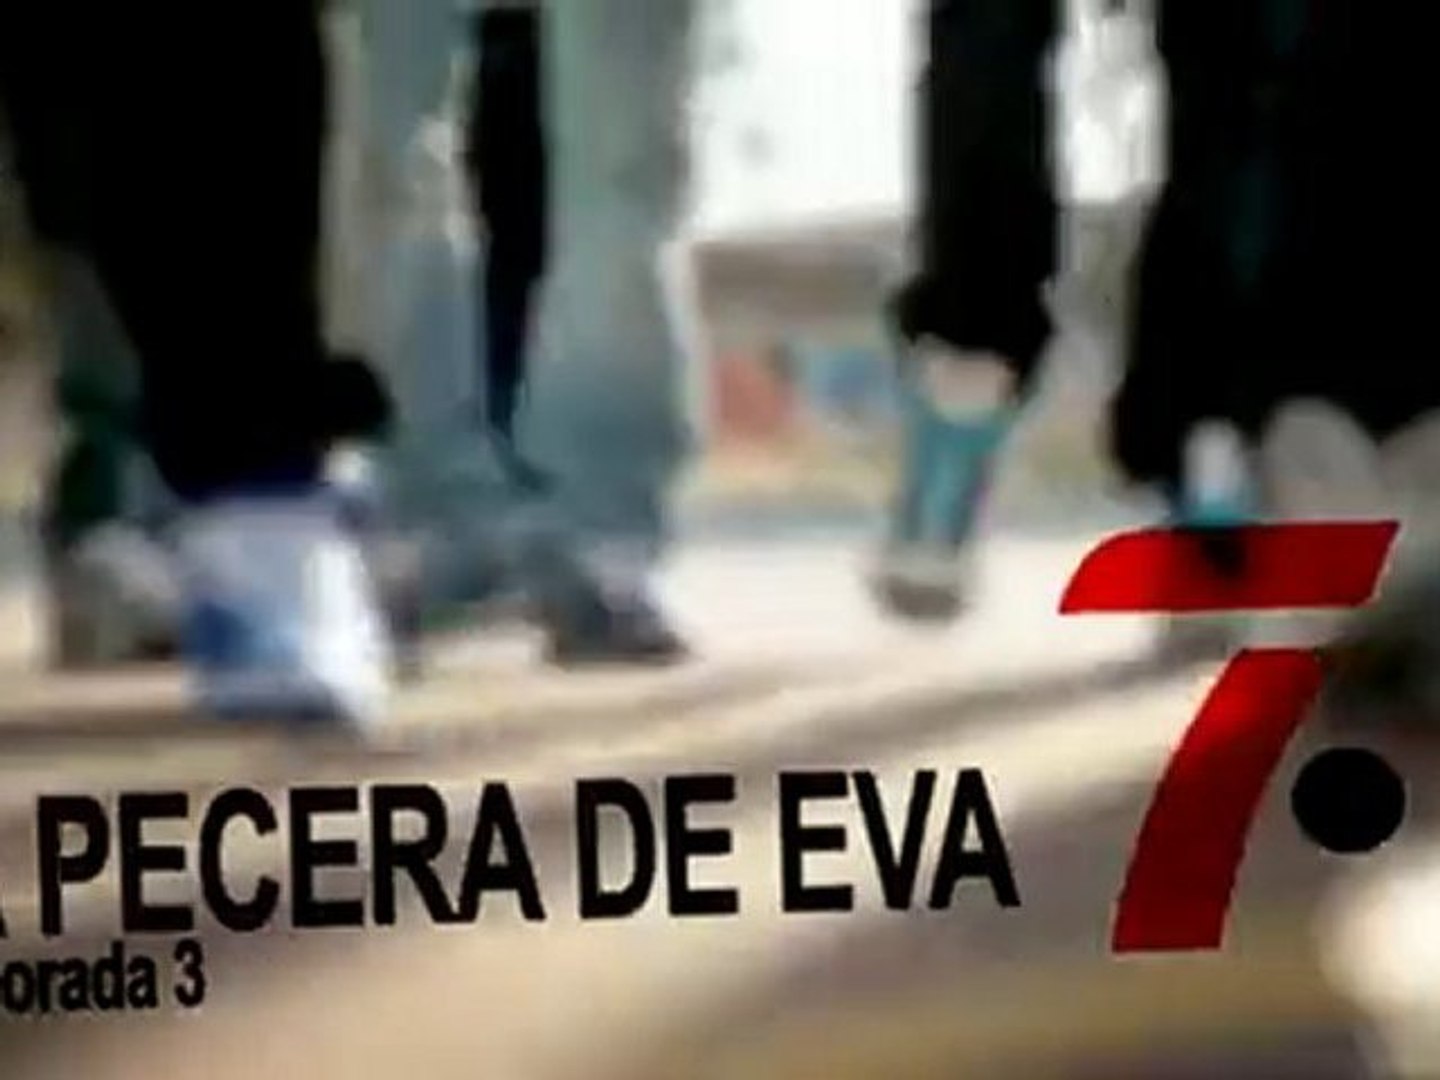 'La pecera de Eva' / 3a temporada - Vídeo Dailymotion